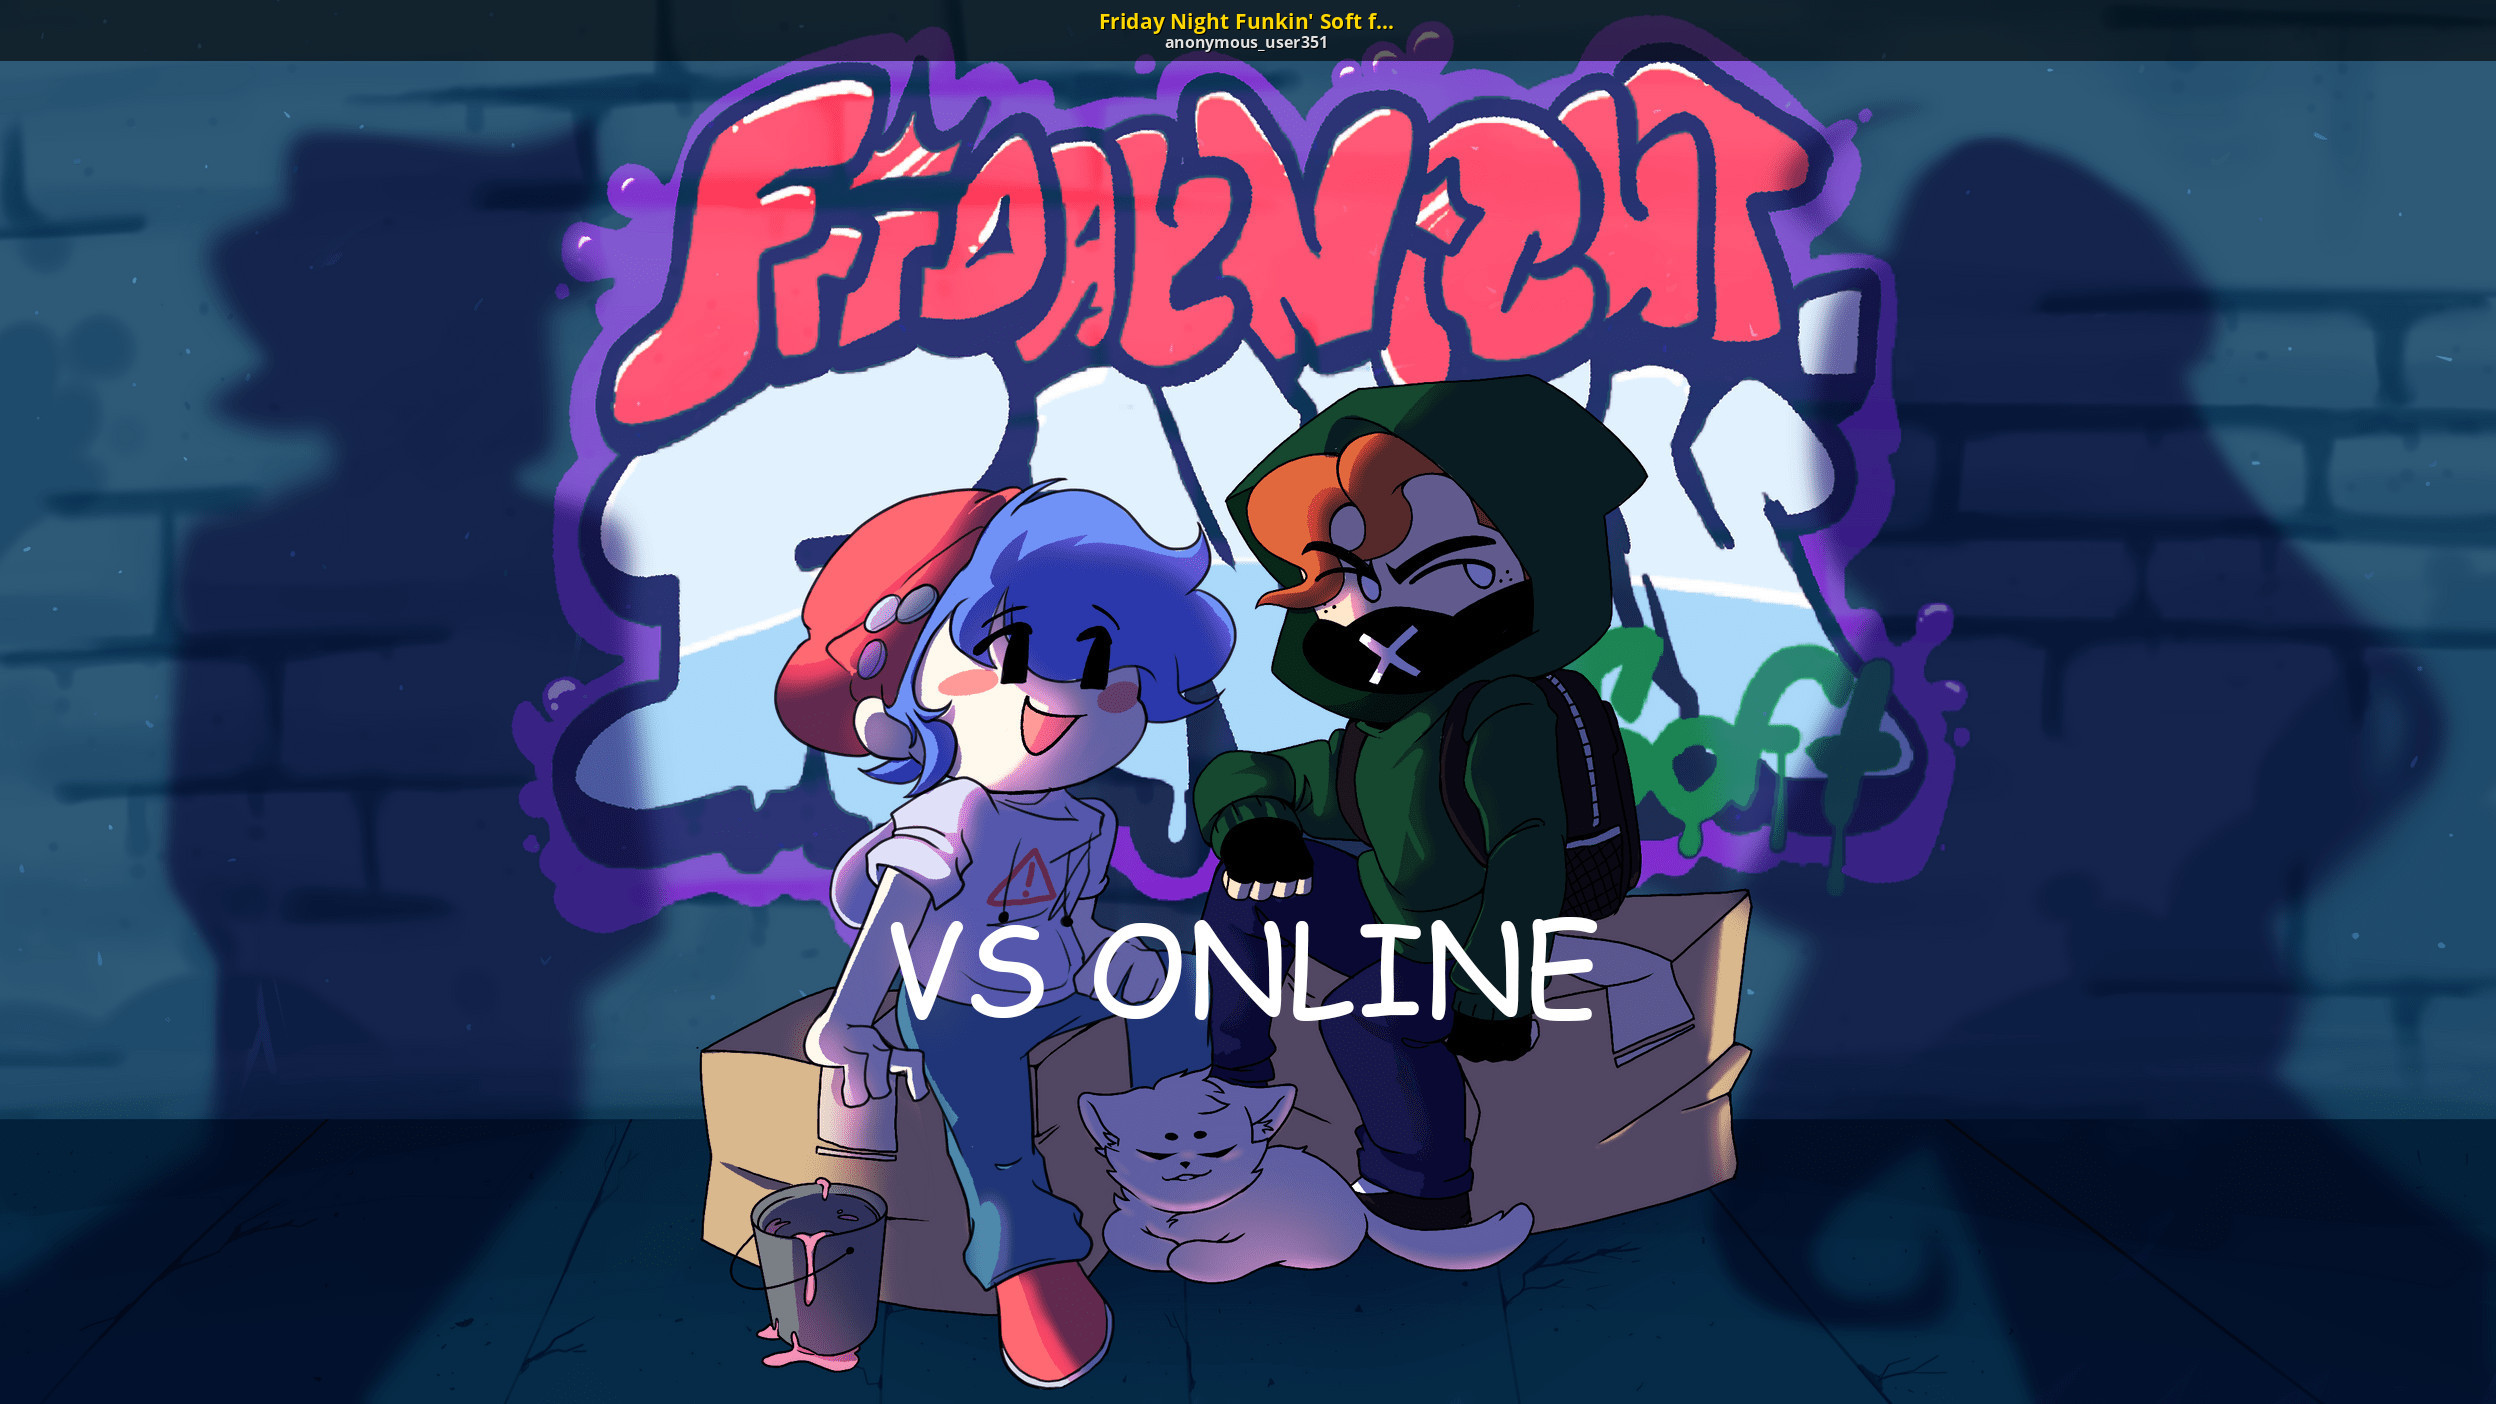 Friday Night Funkin' Soft for Online VS [Friday Night Funkin'] [Mods]